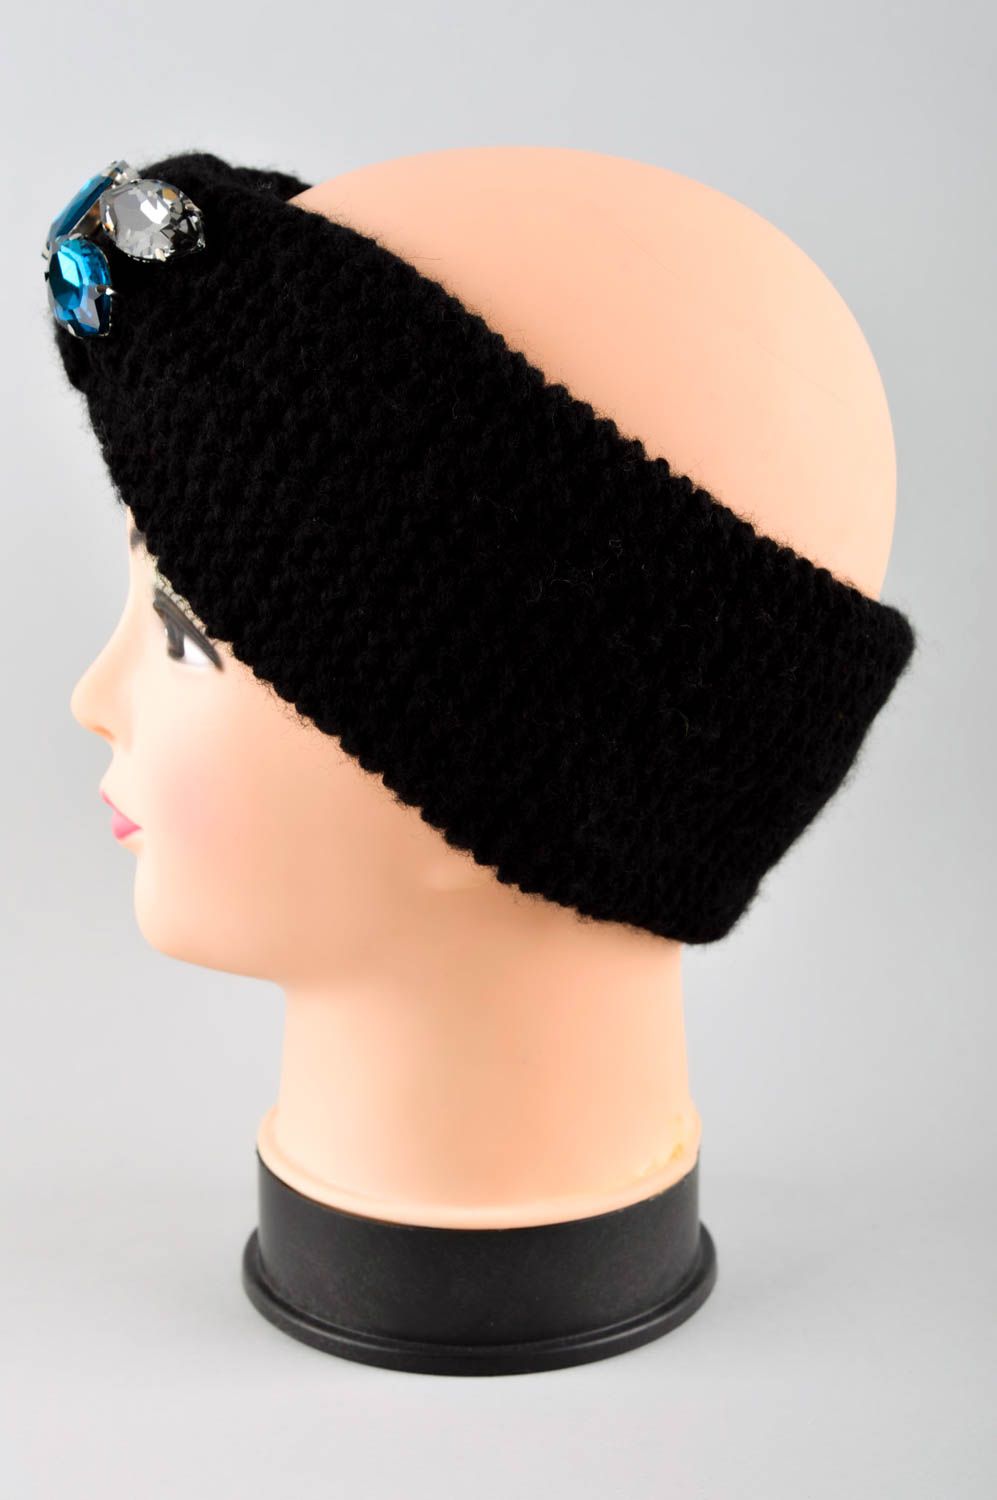 Handmade stylish turban unusual black headband knitted winter accessory photo 3